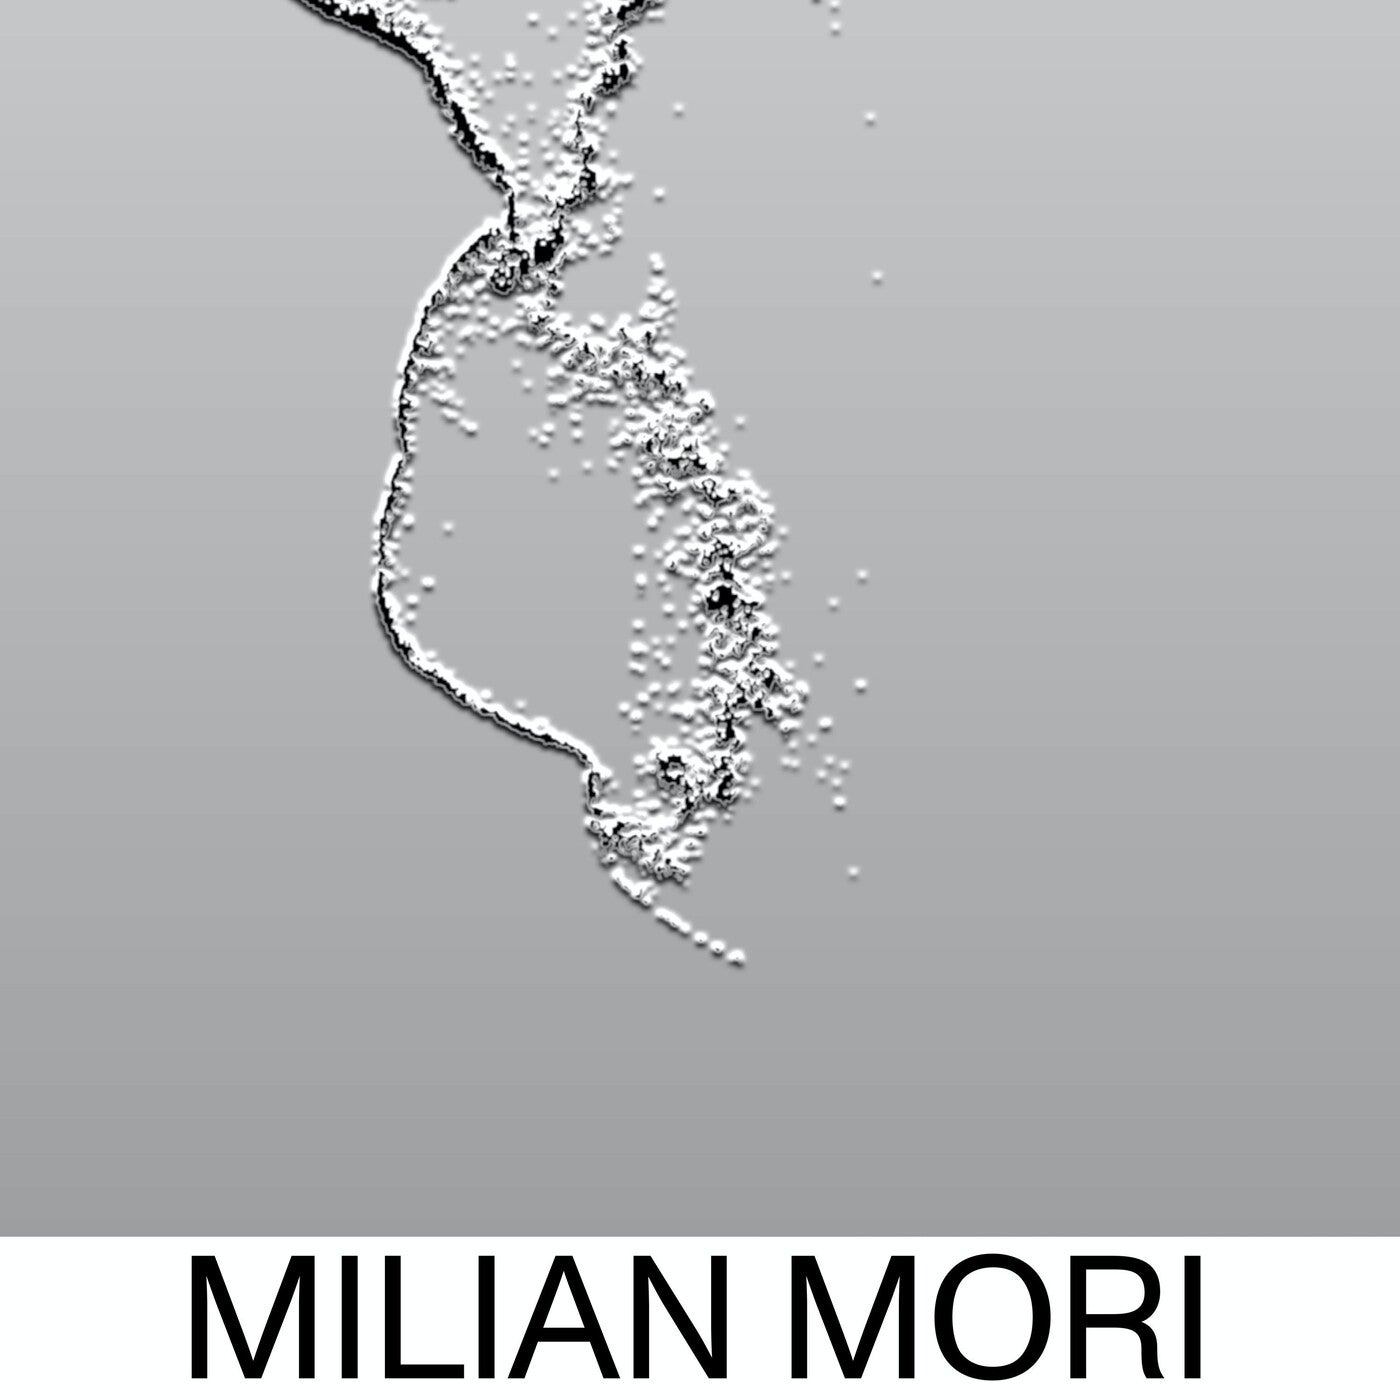 What We Talk About: Milian Mori